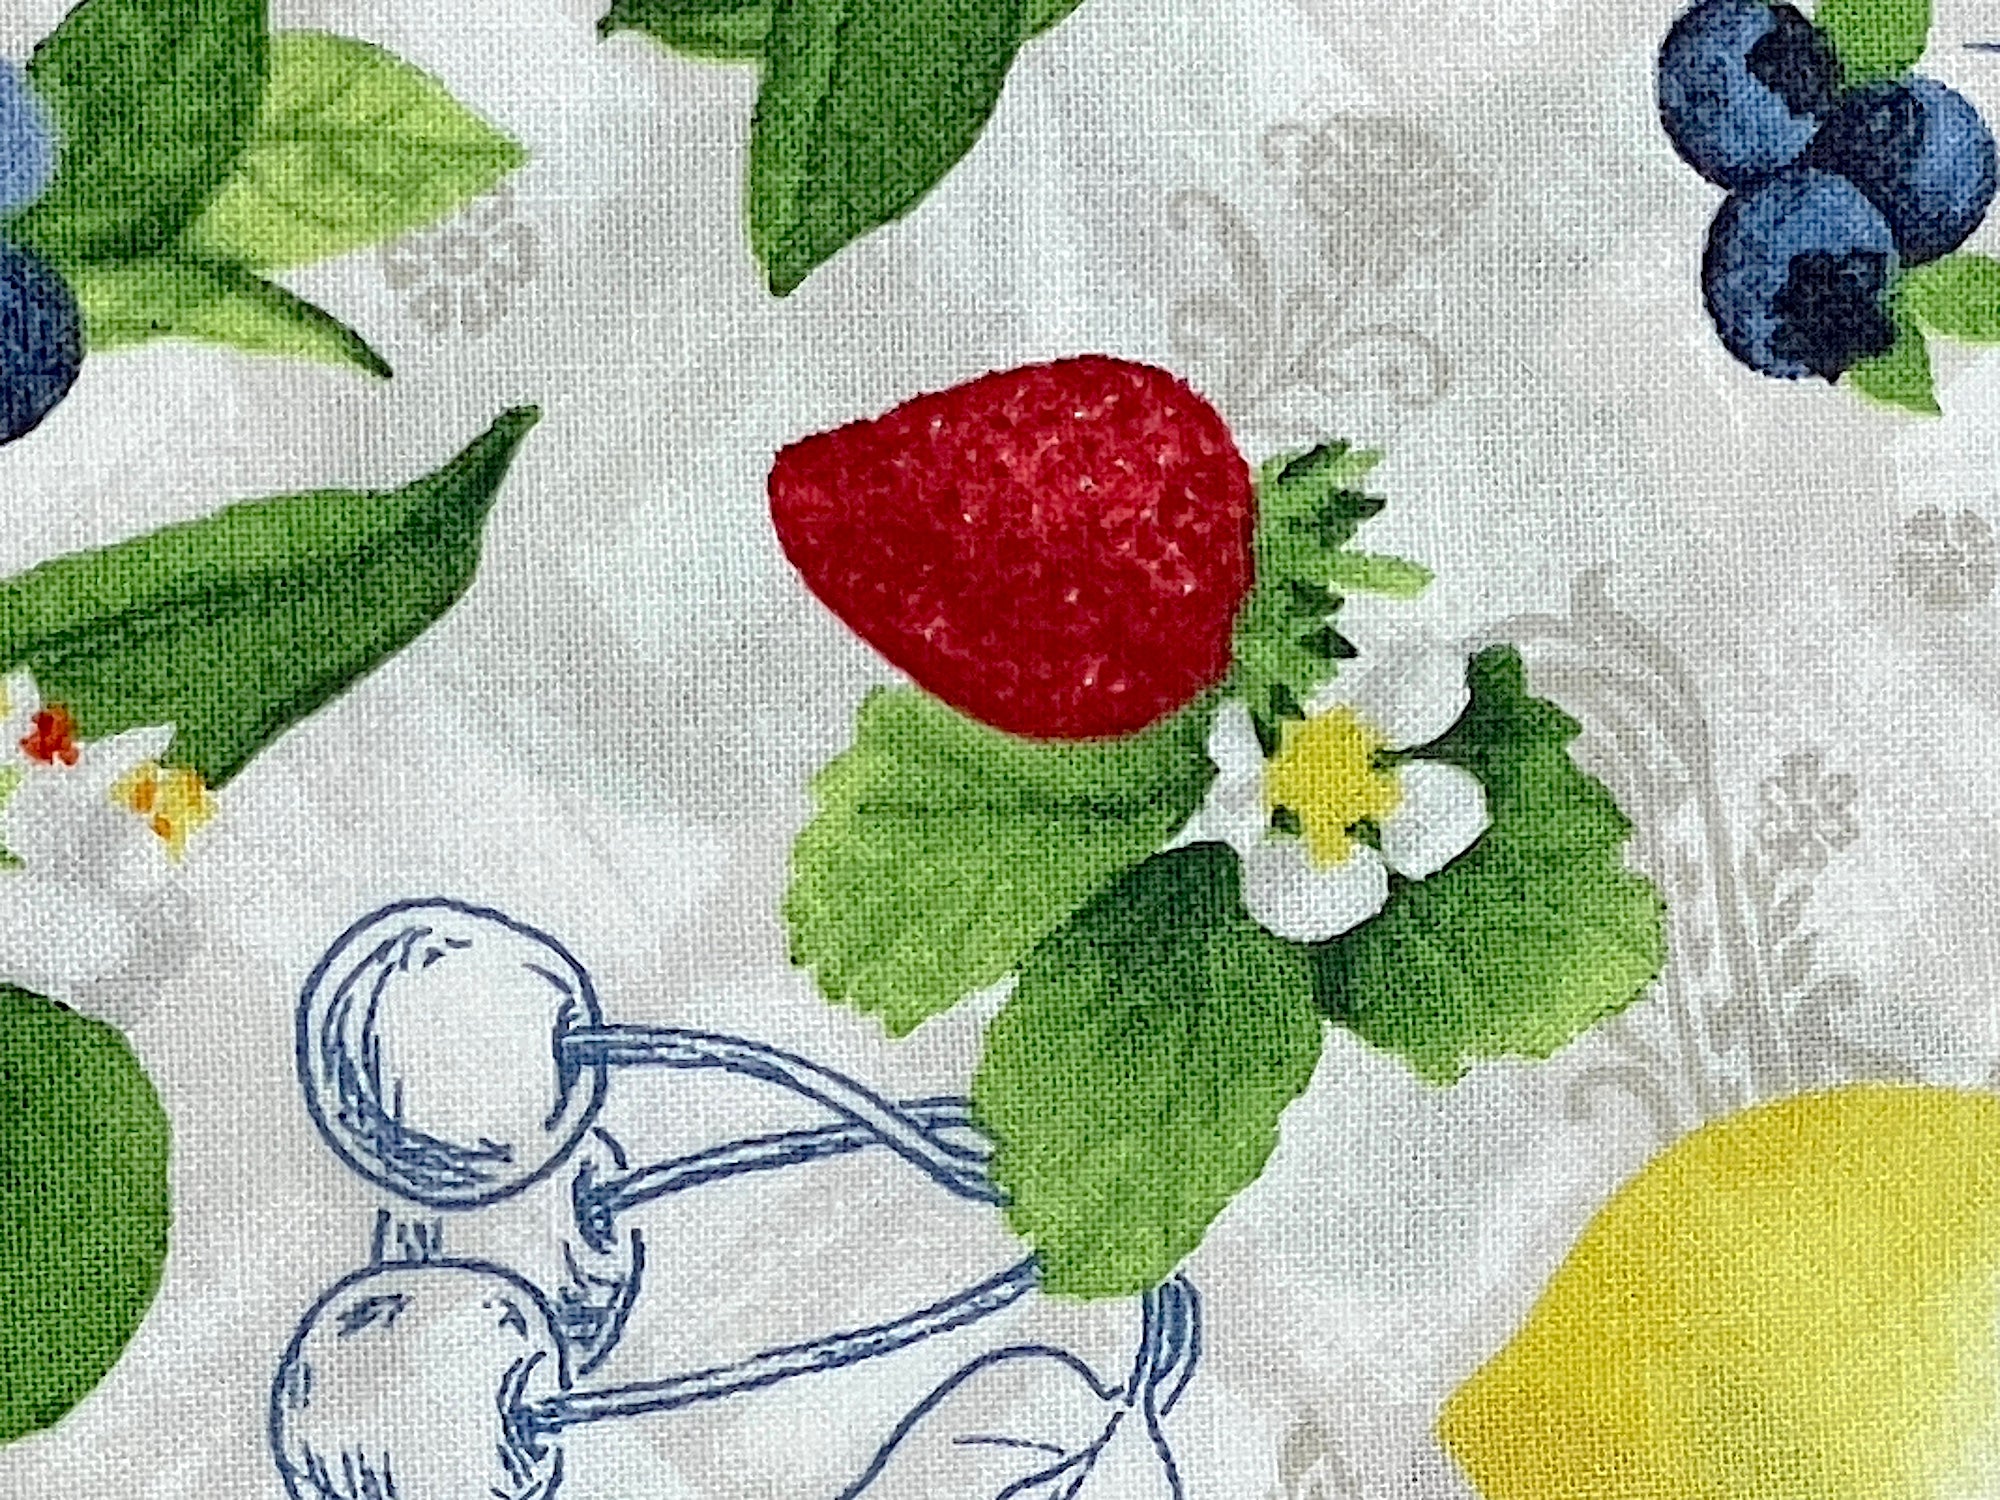 Close up of a strawberry.